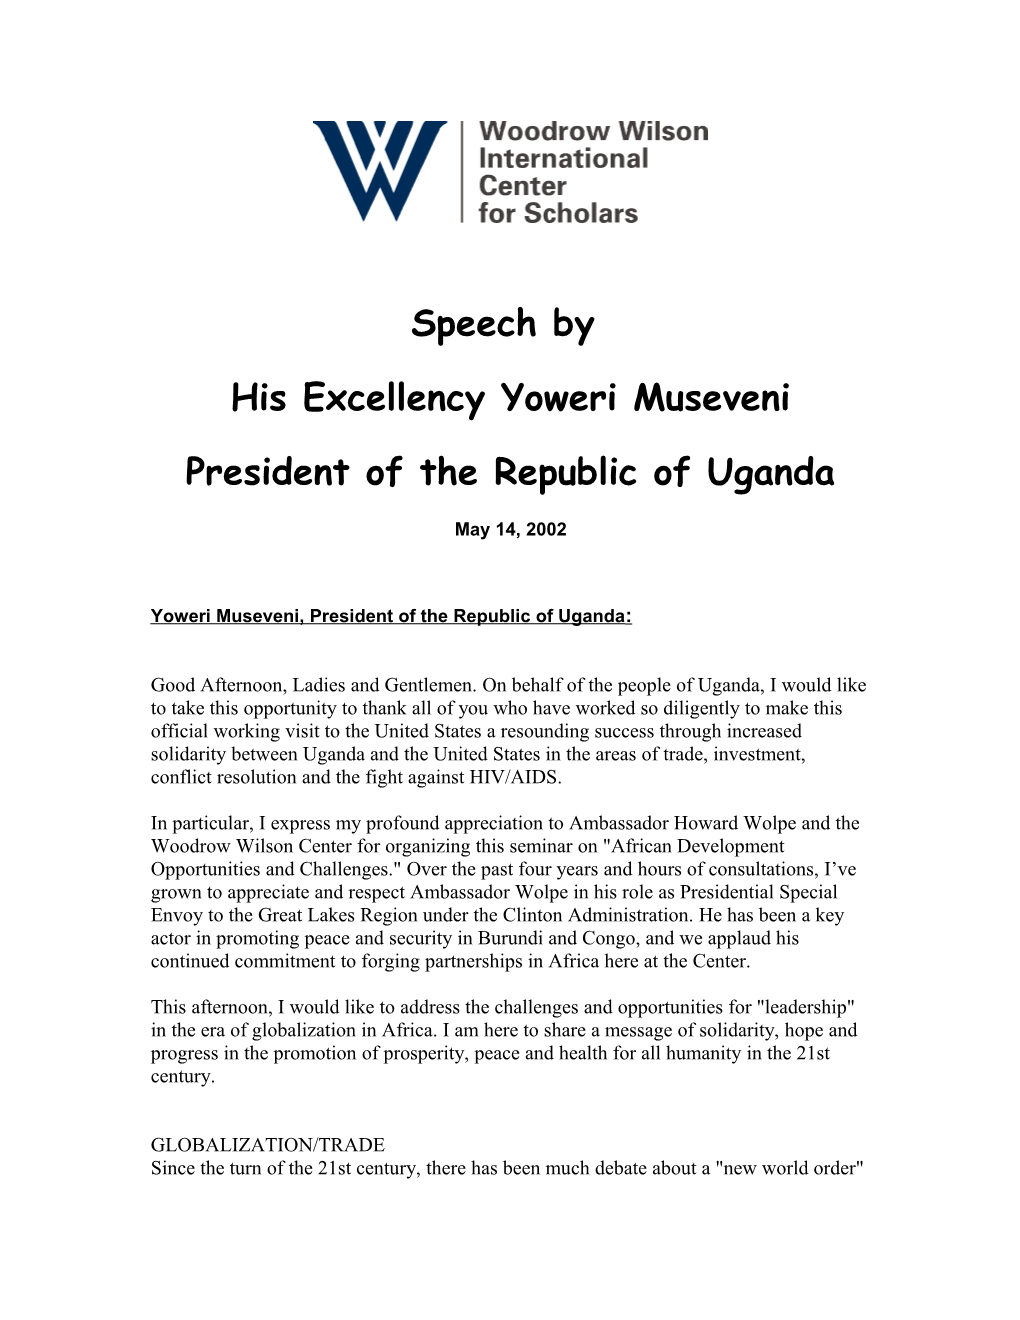 Speech by His Excellency, Yoweri Museveni, President of the Republic of Uganda